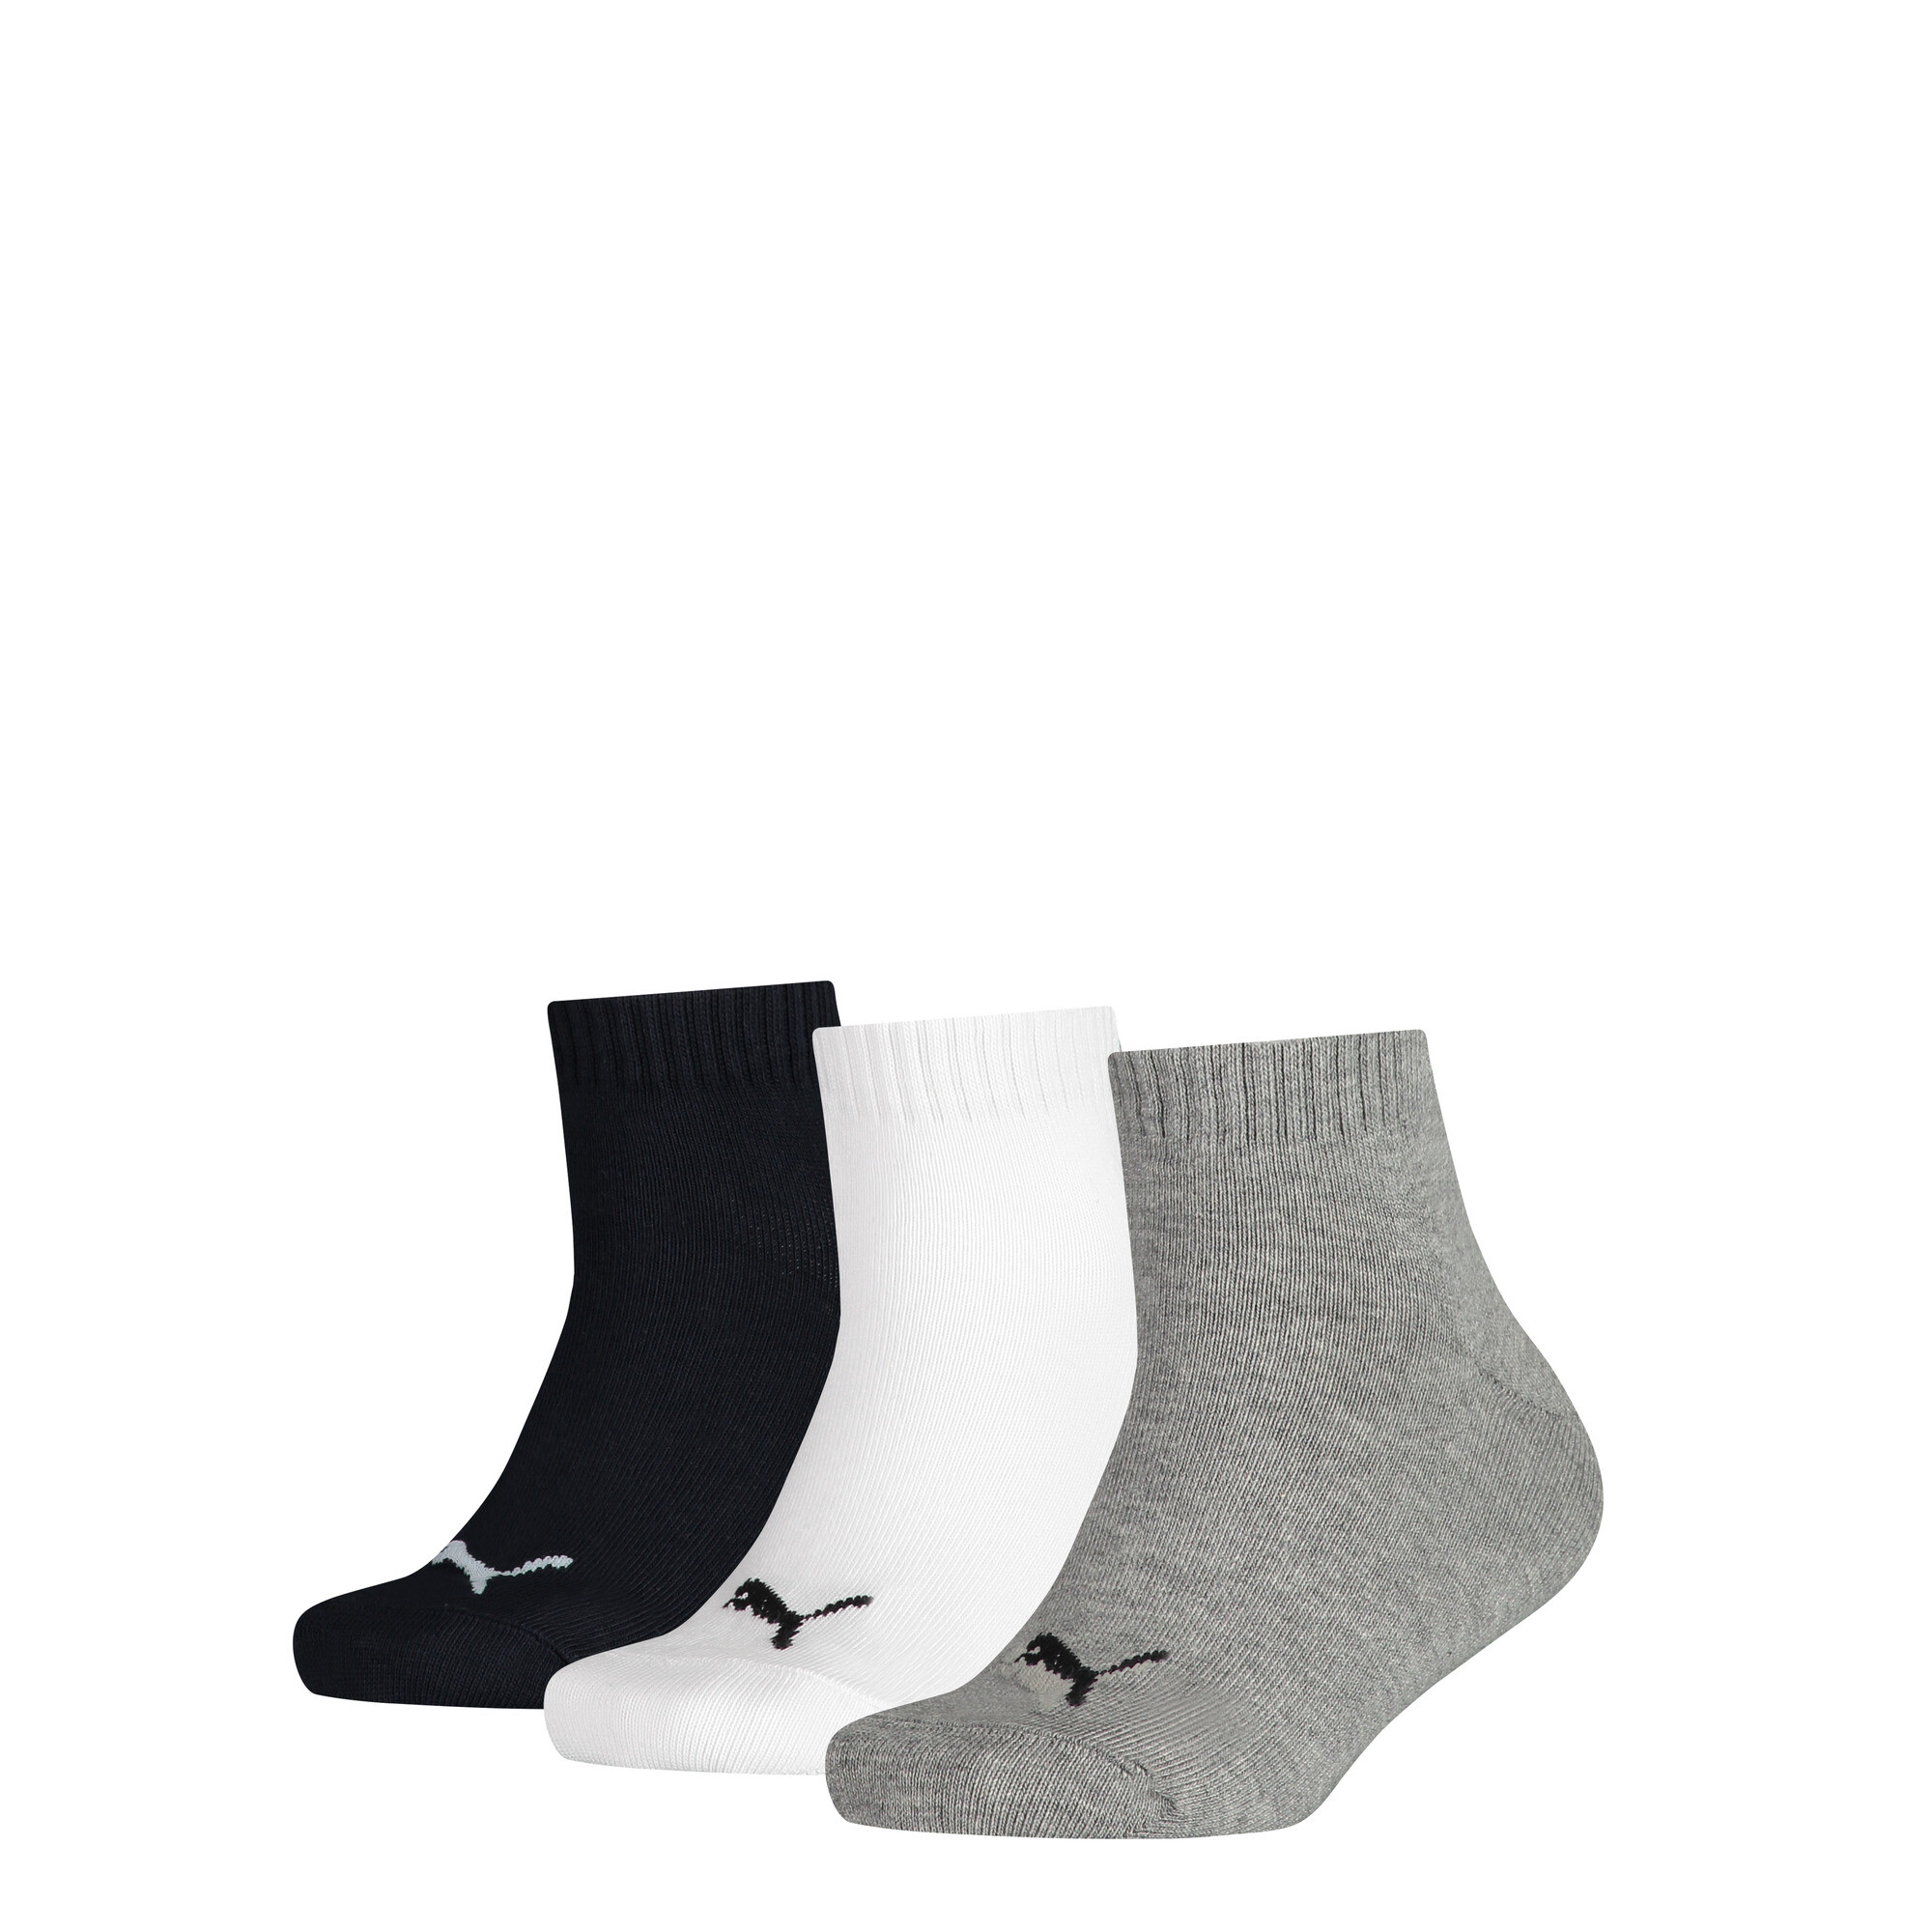 Kids' PUMA Quarter Socks 3 Pack In Grey/White/Black, Size 23-26